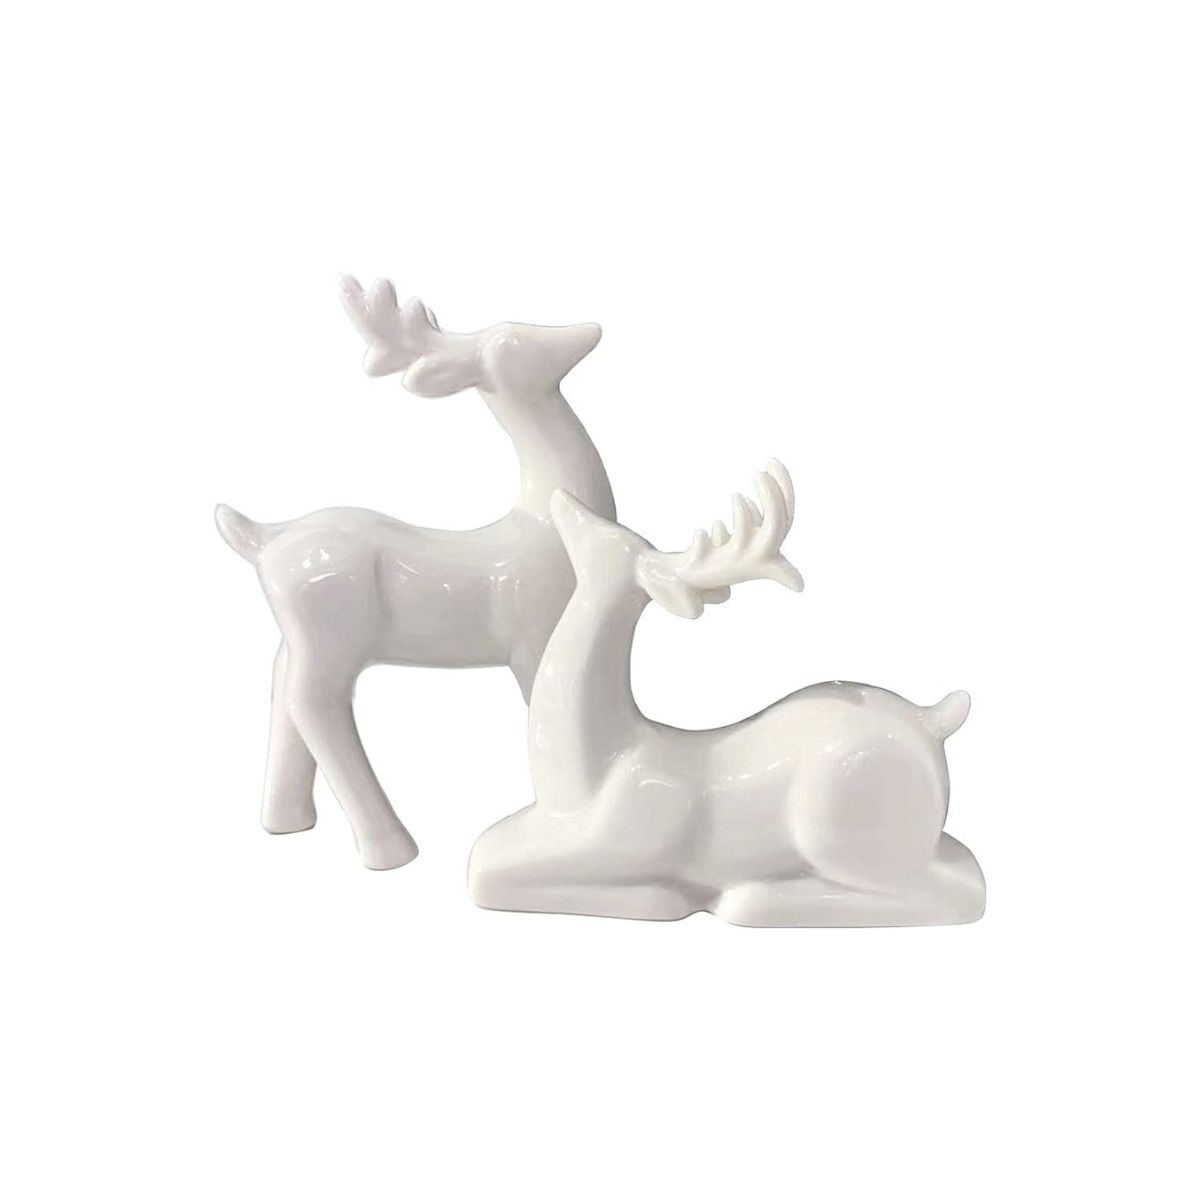 White ceramic deer Christmas decorations